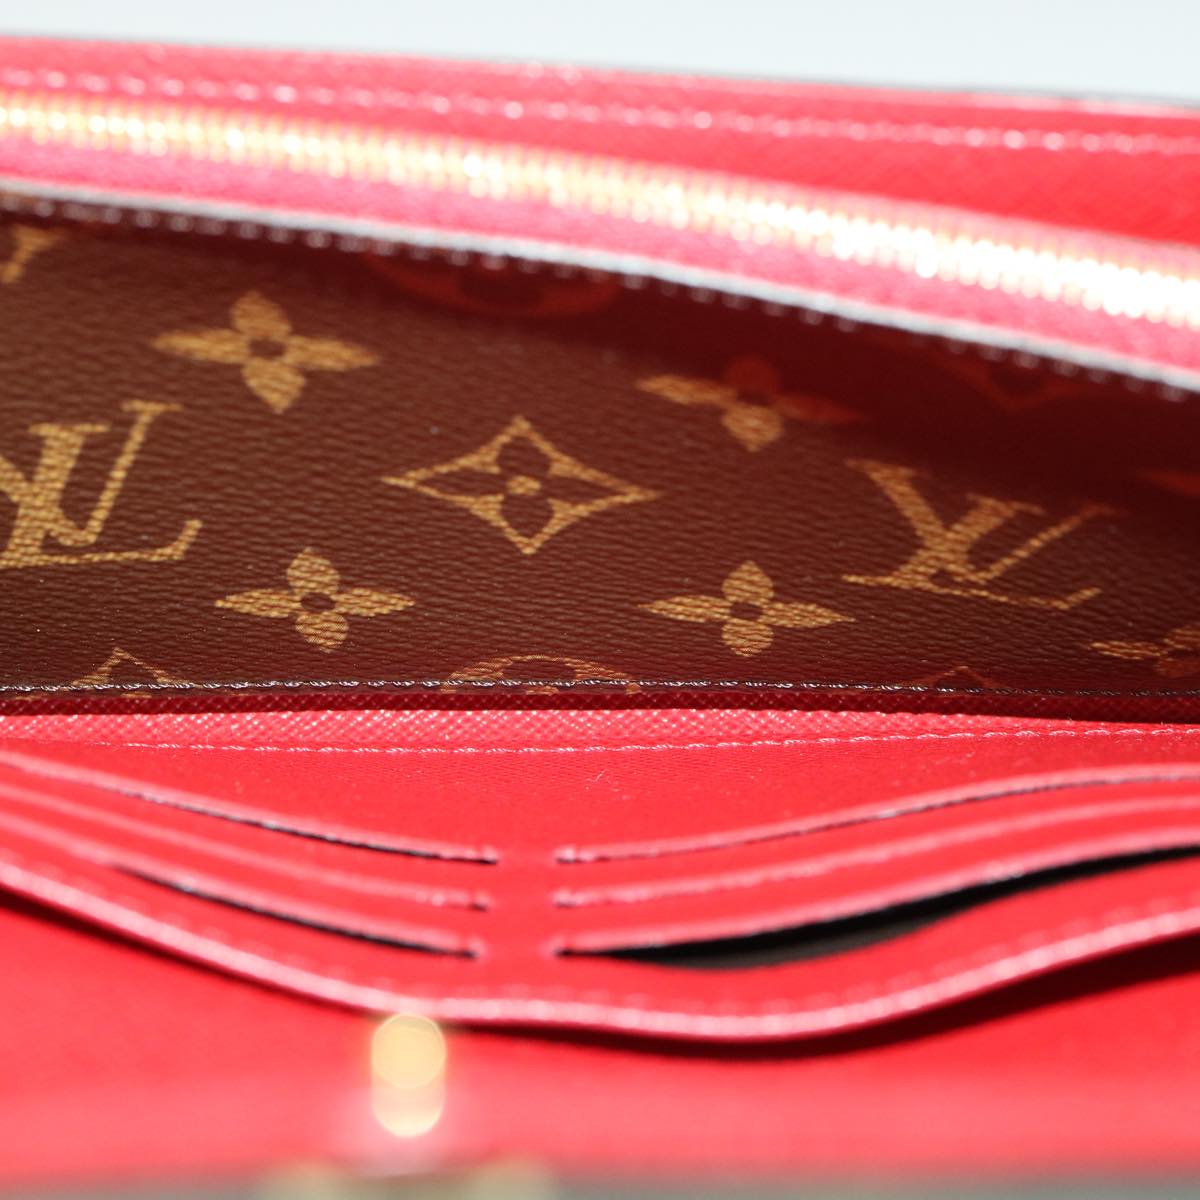 Shop Louis Vuitton PORTEFEUILLE SARAH Sarah wallet retiro (M61184) by SkyNS